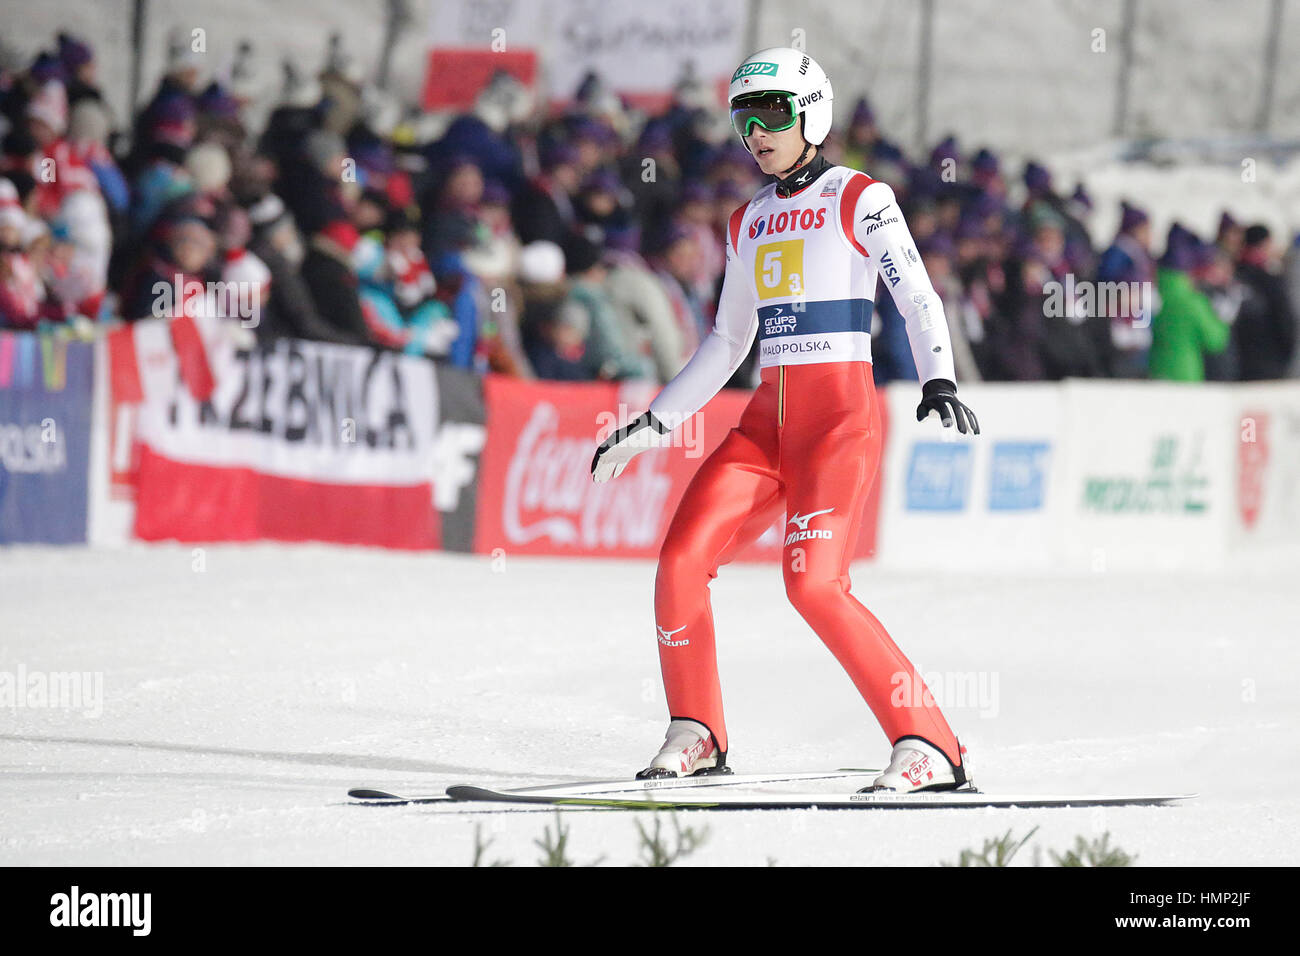 ZAKOPANE, POLAND - JANUARY 23, 2016: FIS Ski Jumping World Cup in Zakopane o/p Kenshiro Ito JAP Stock Photo